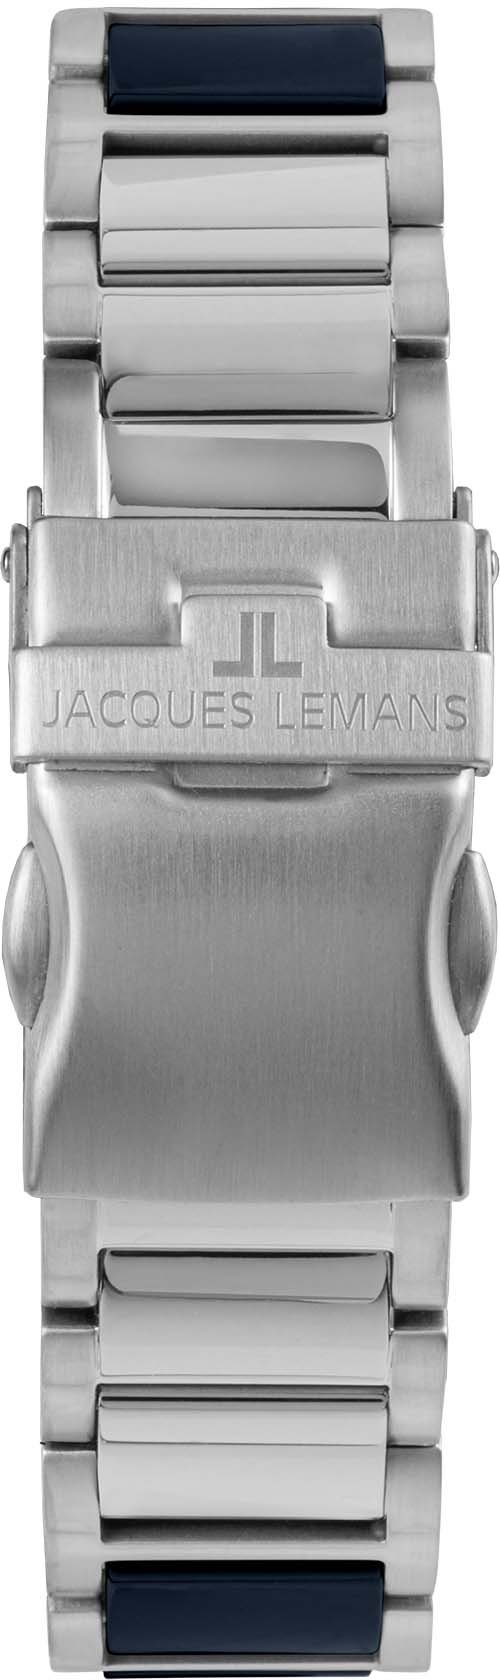 Jacques Lemans Keramikuhr Liverpool, 42-12B dunkelblau